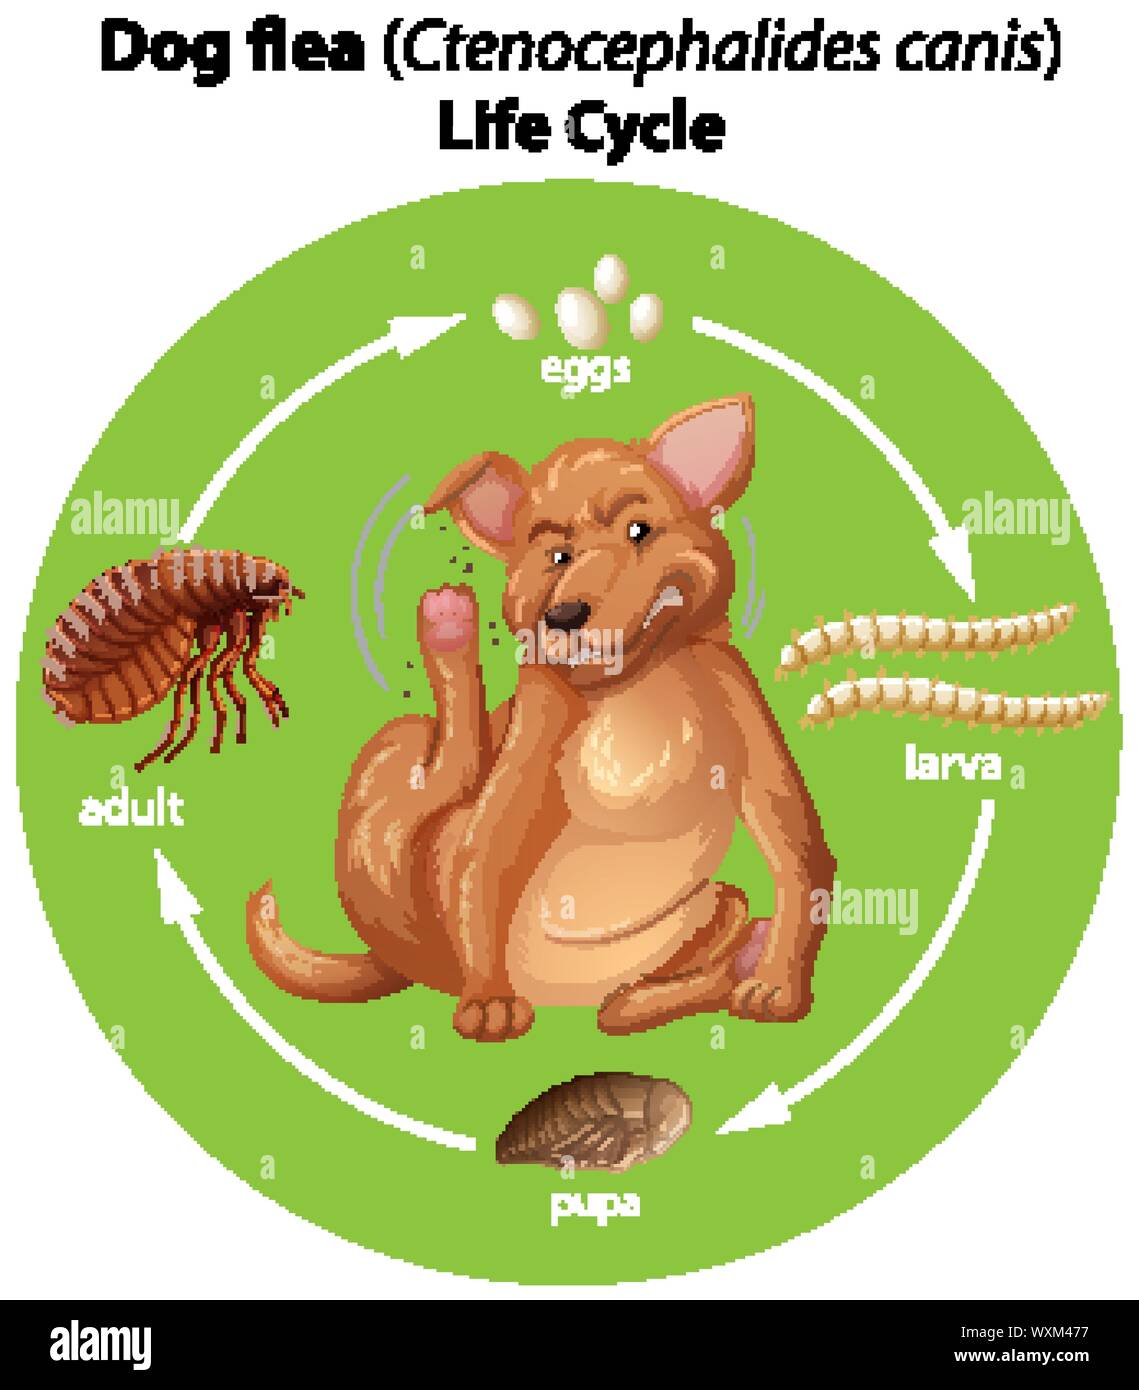 Diagram showing dog flea life cycle illustration Stock Vector